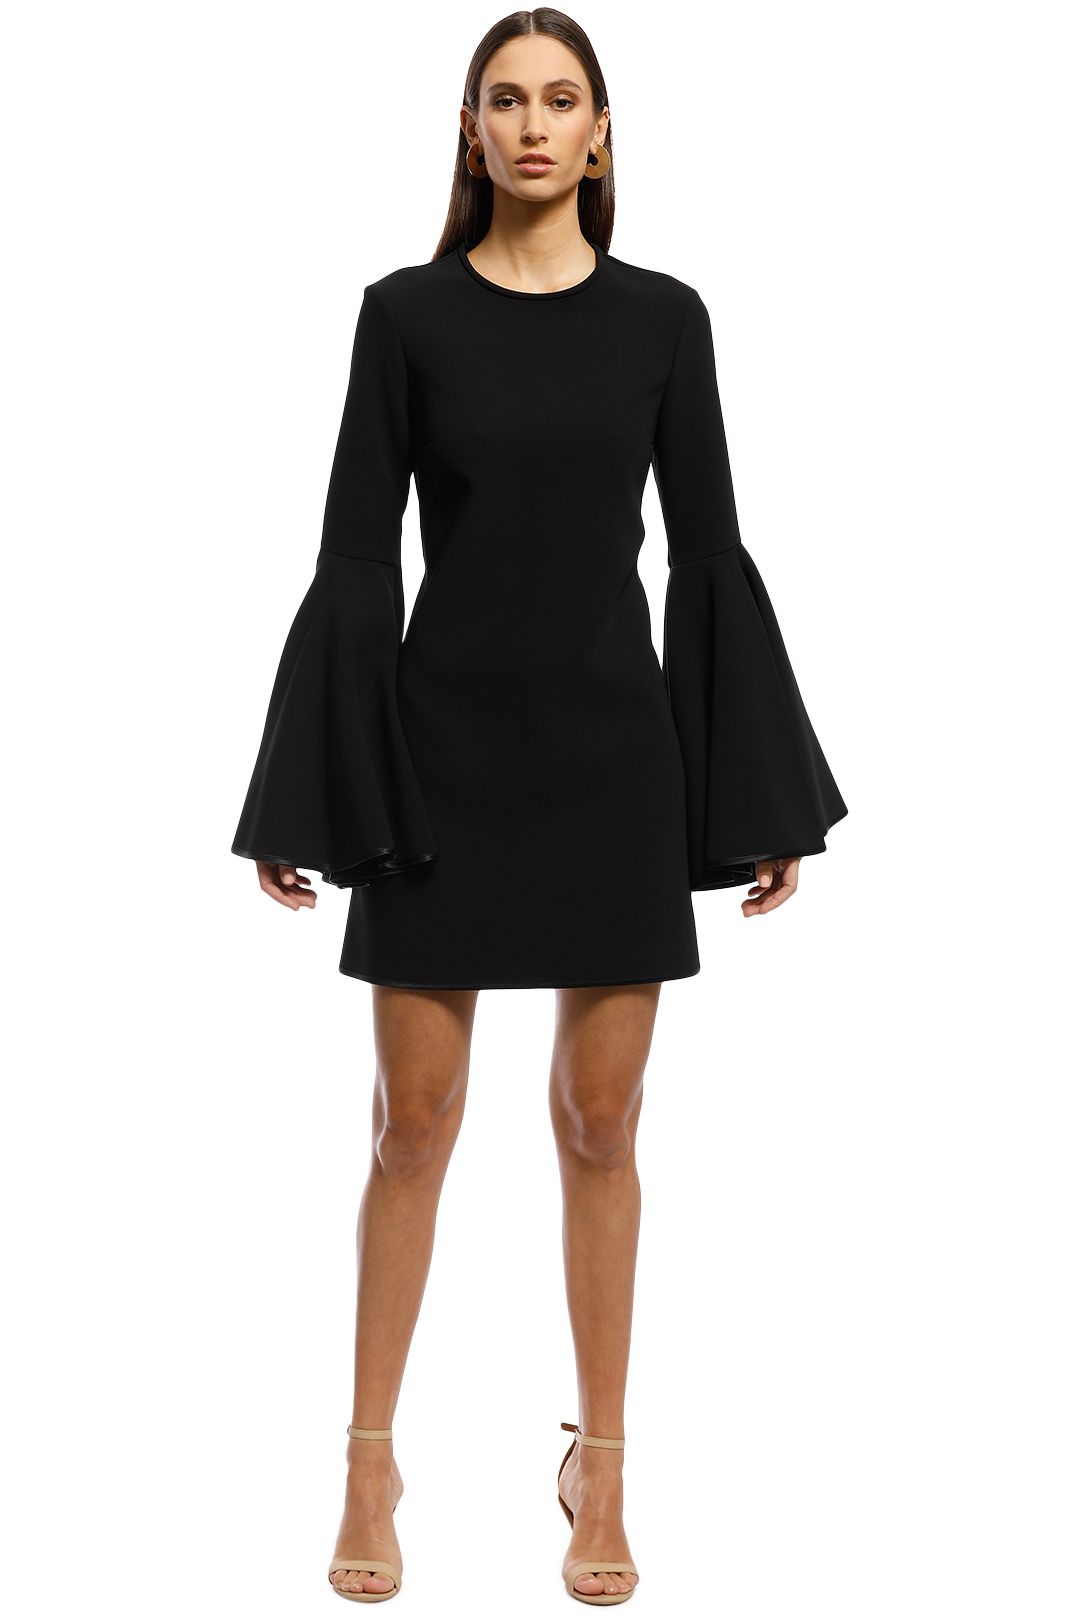 Dogma Flare Sleeve Mini Dress by Ellery for Hire | GlamCorner